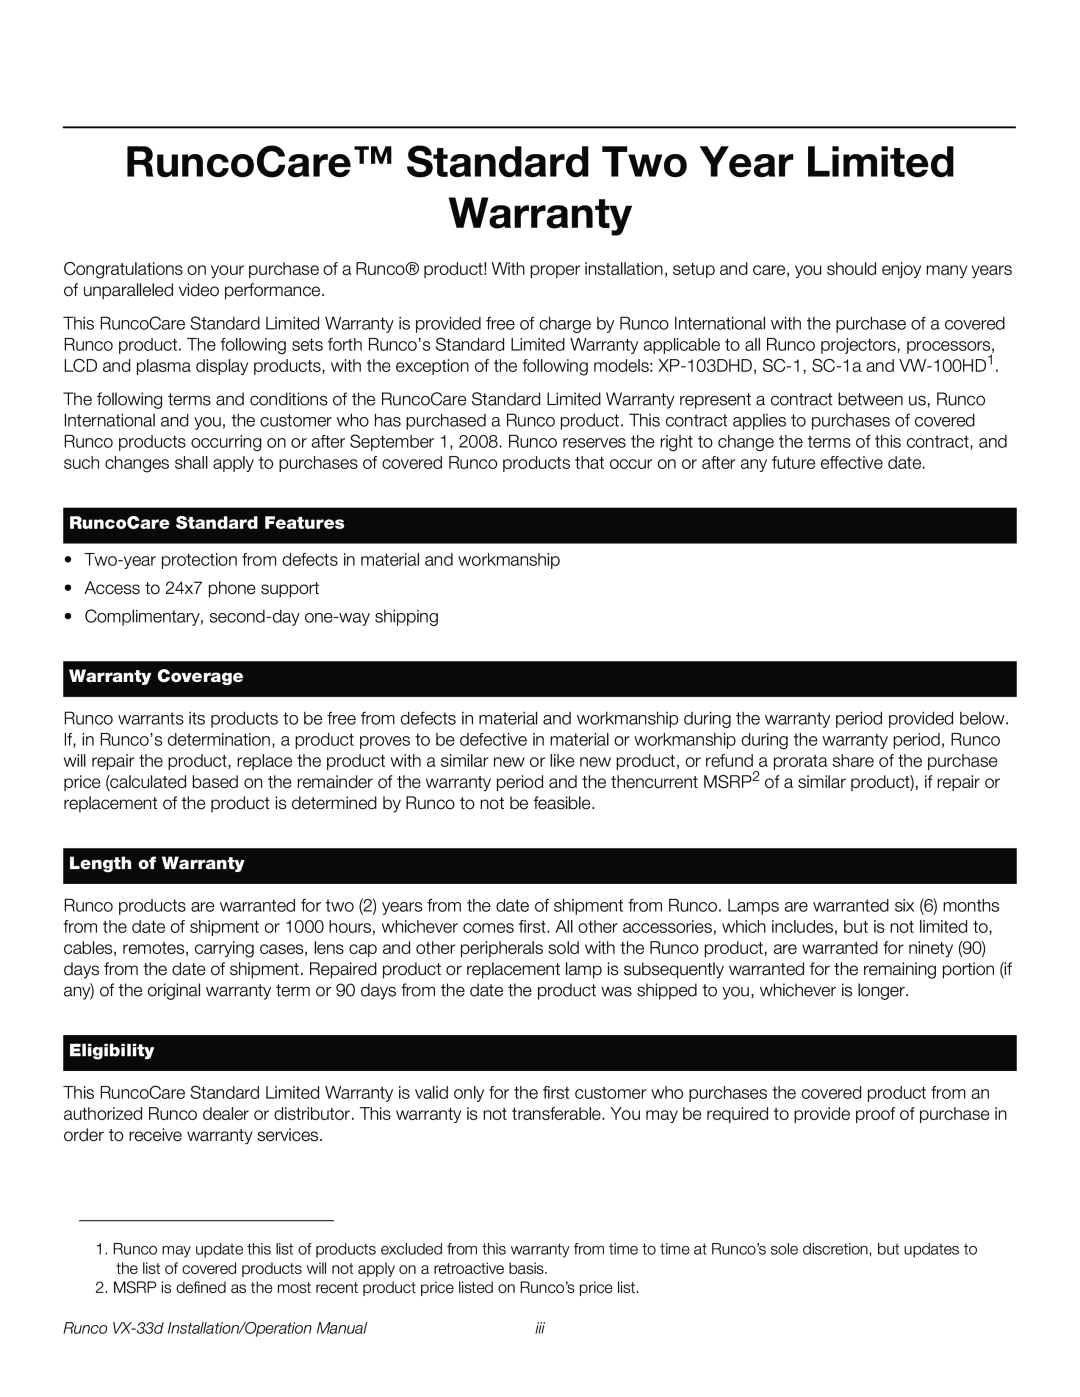 Runco VX-33D RuncoCare Standard Two Year Limited Warranty, RuncoCare Standard Features, Warranty Coverage, Eligibility 